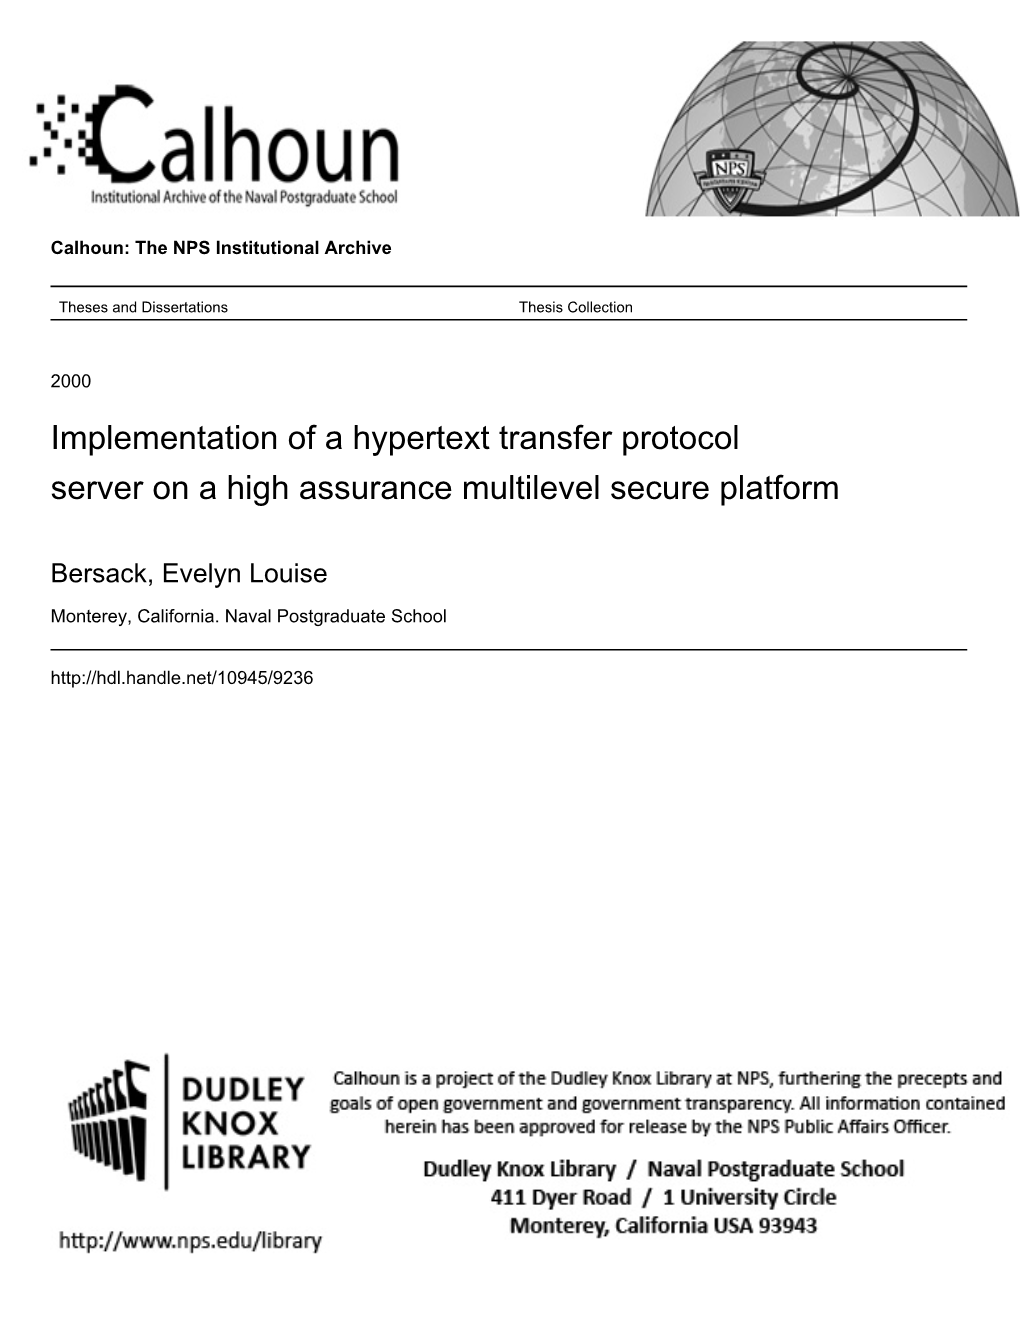 Implementation of a Hypertext Transfer Protocol Server on a High Assurance Multilevel Secure Platform